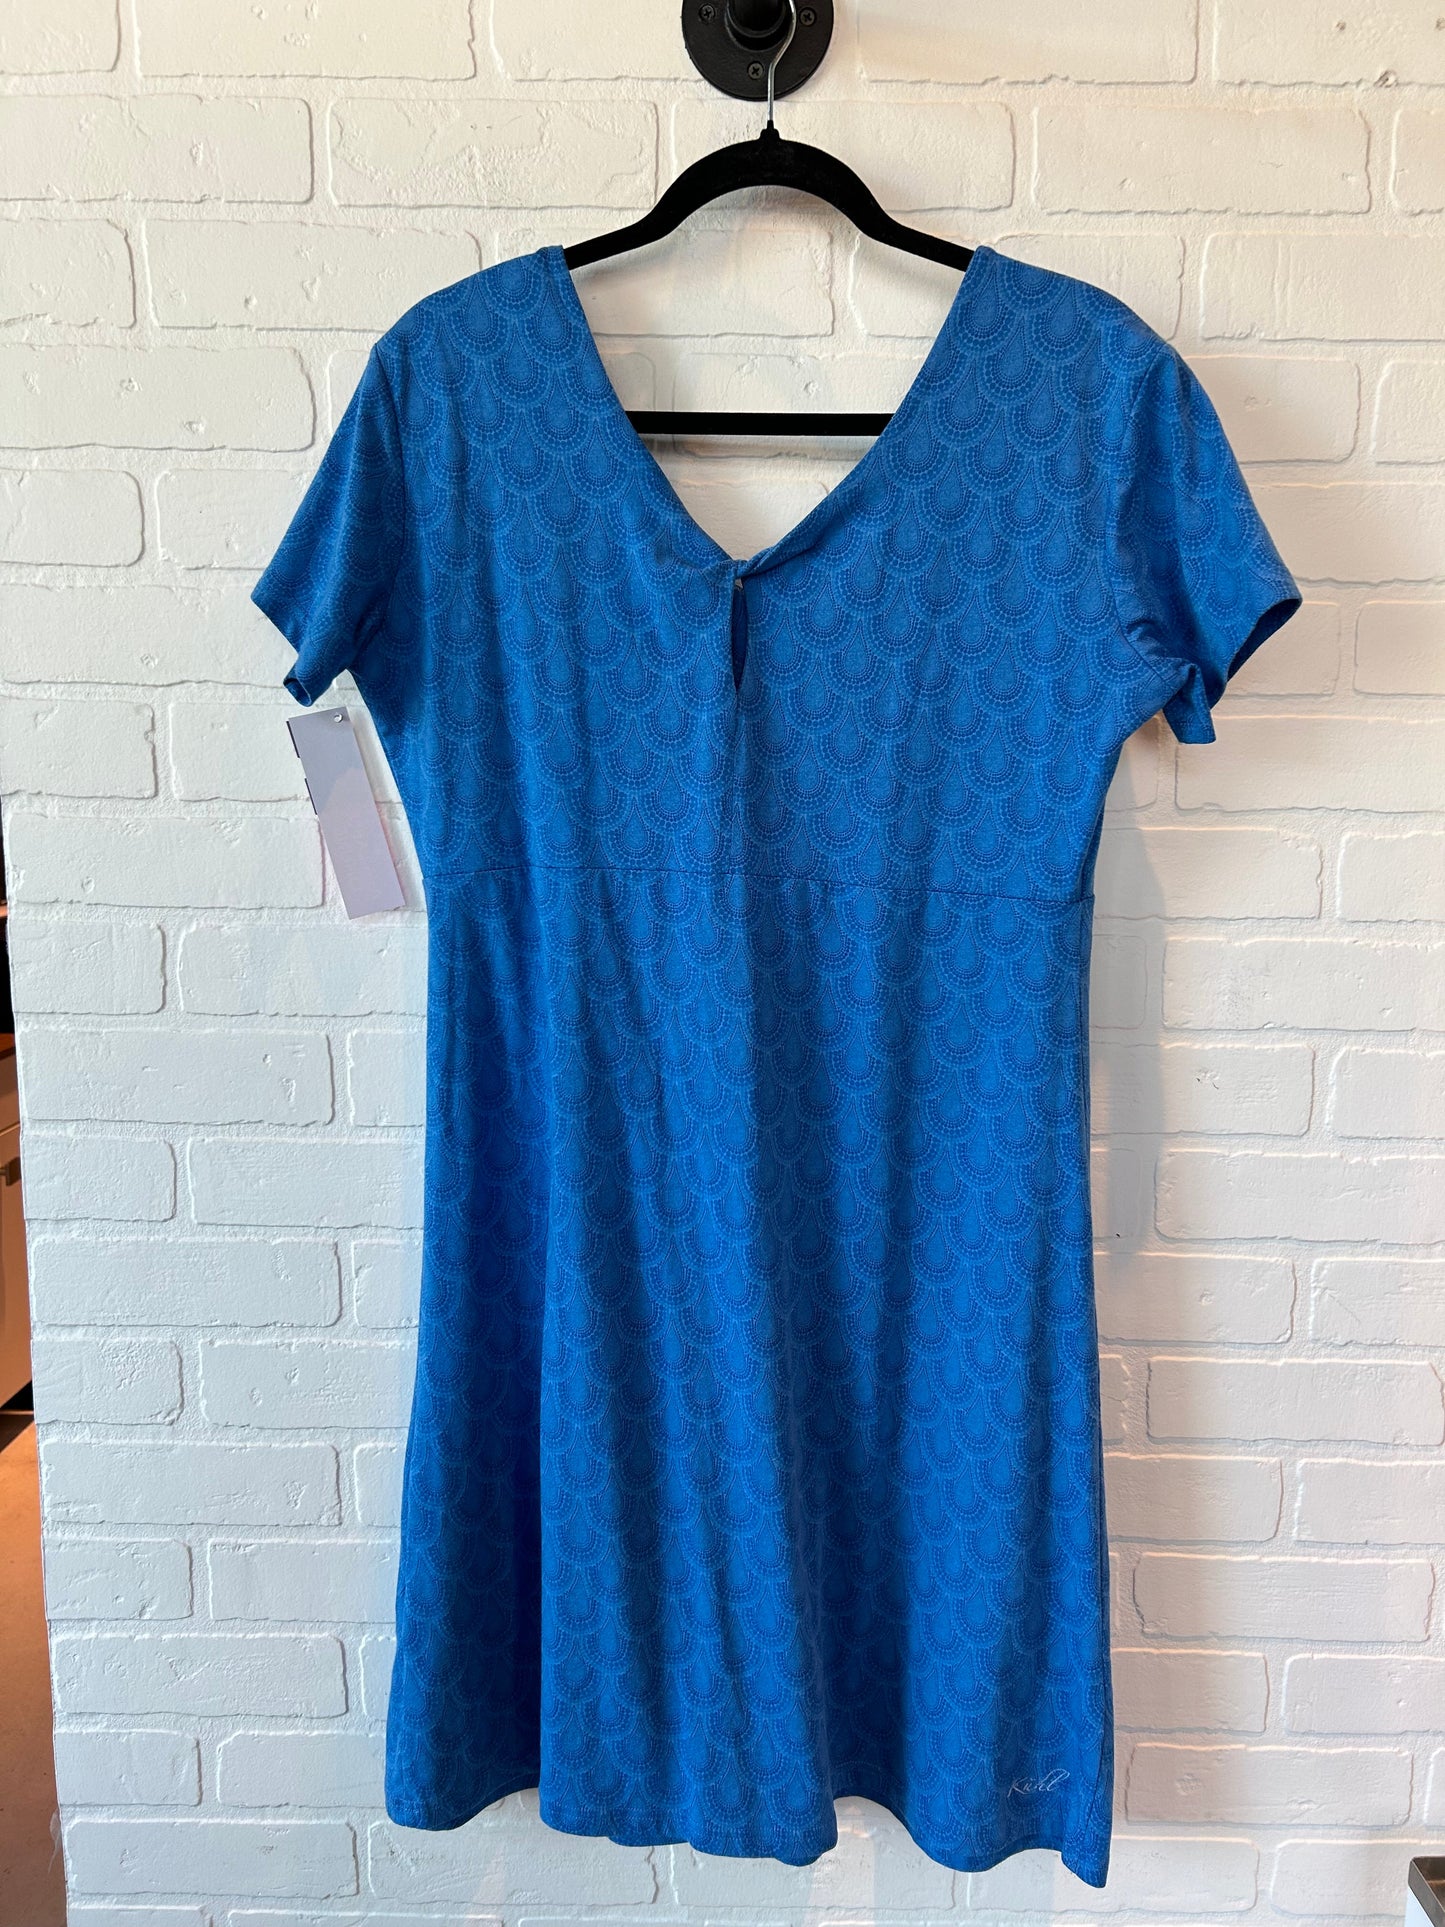 Blue Athletic Dress Kuhl, Size L